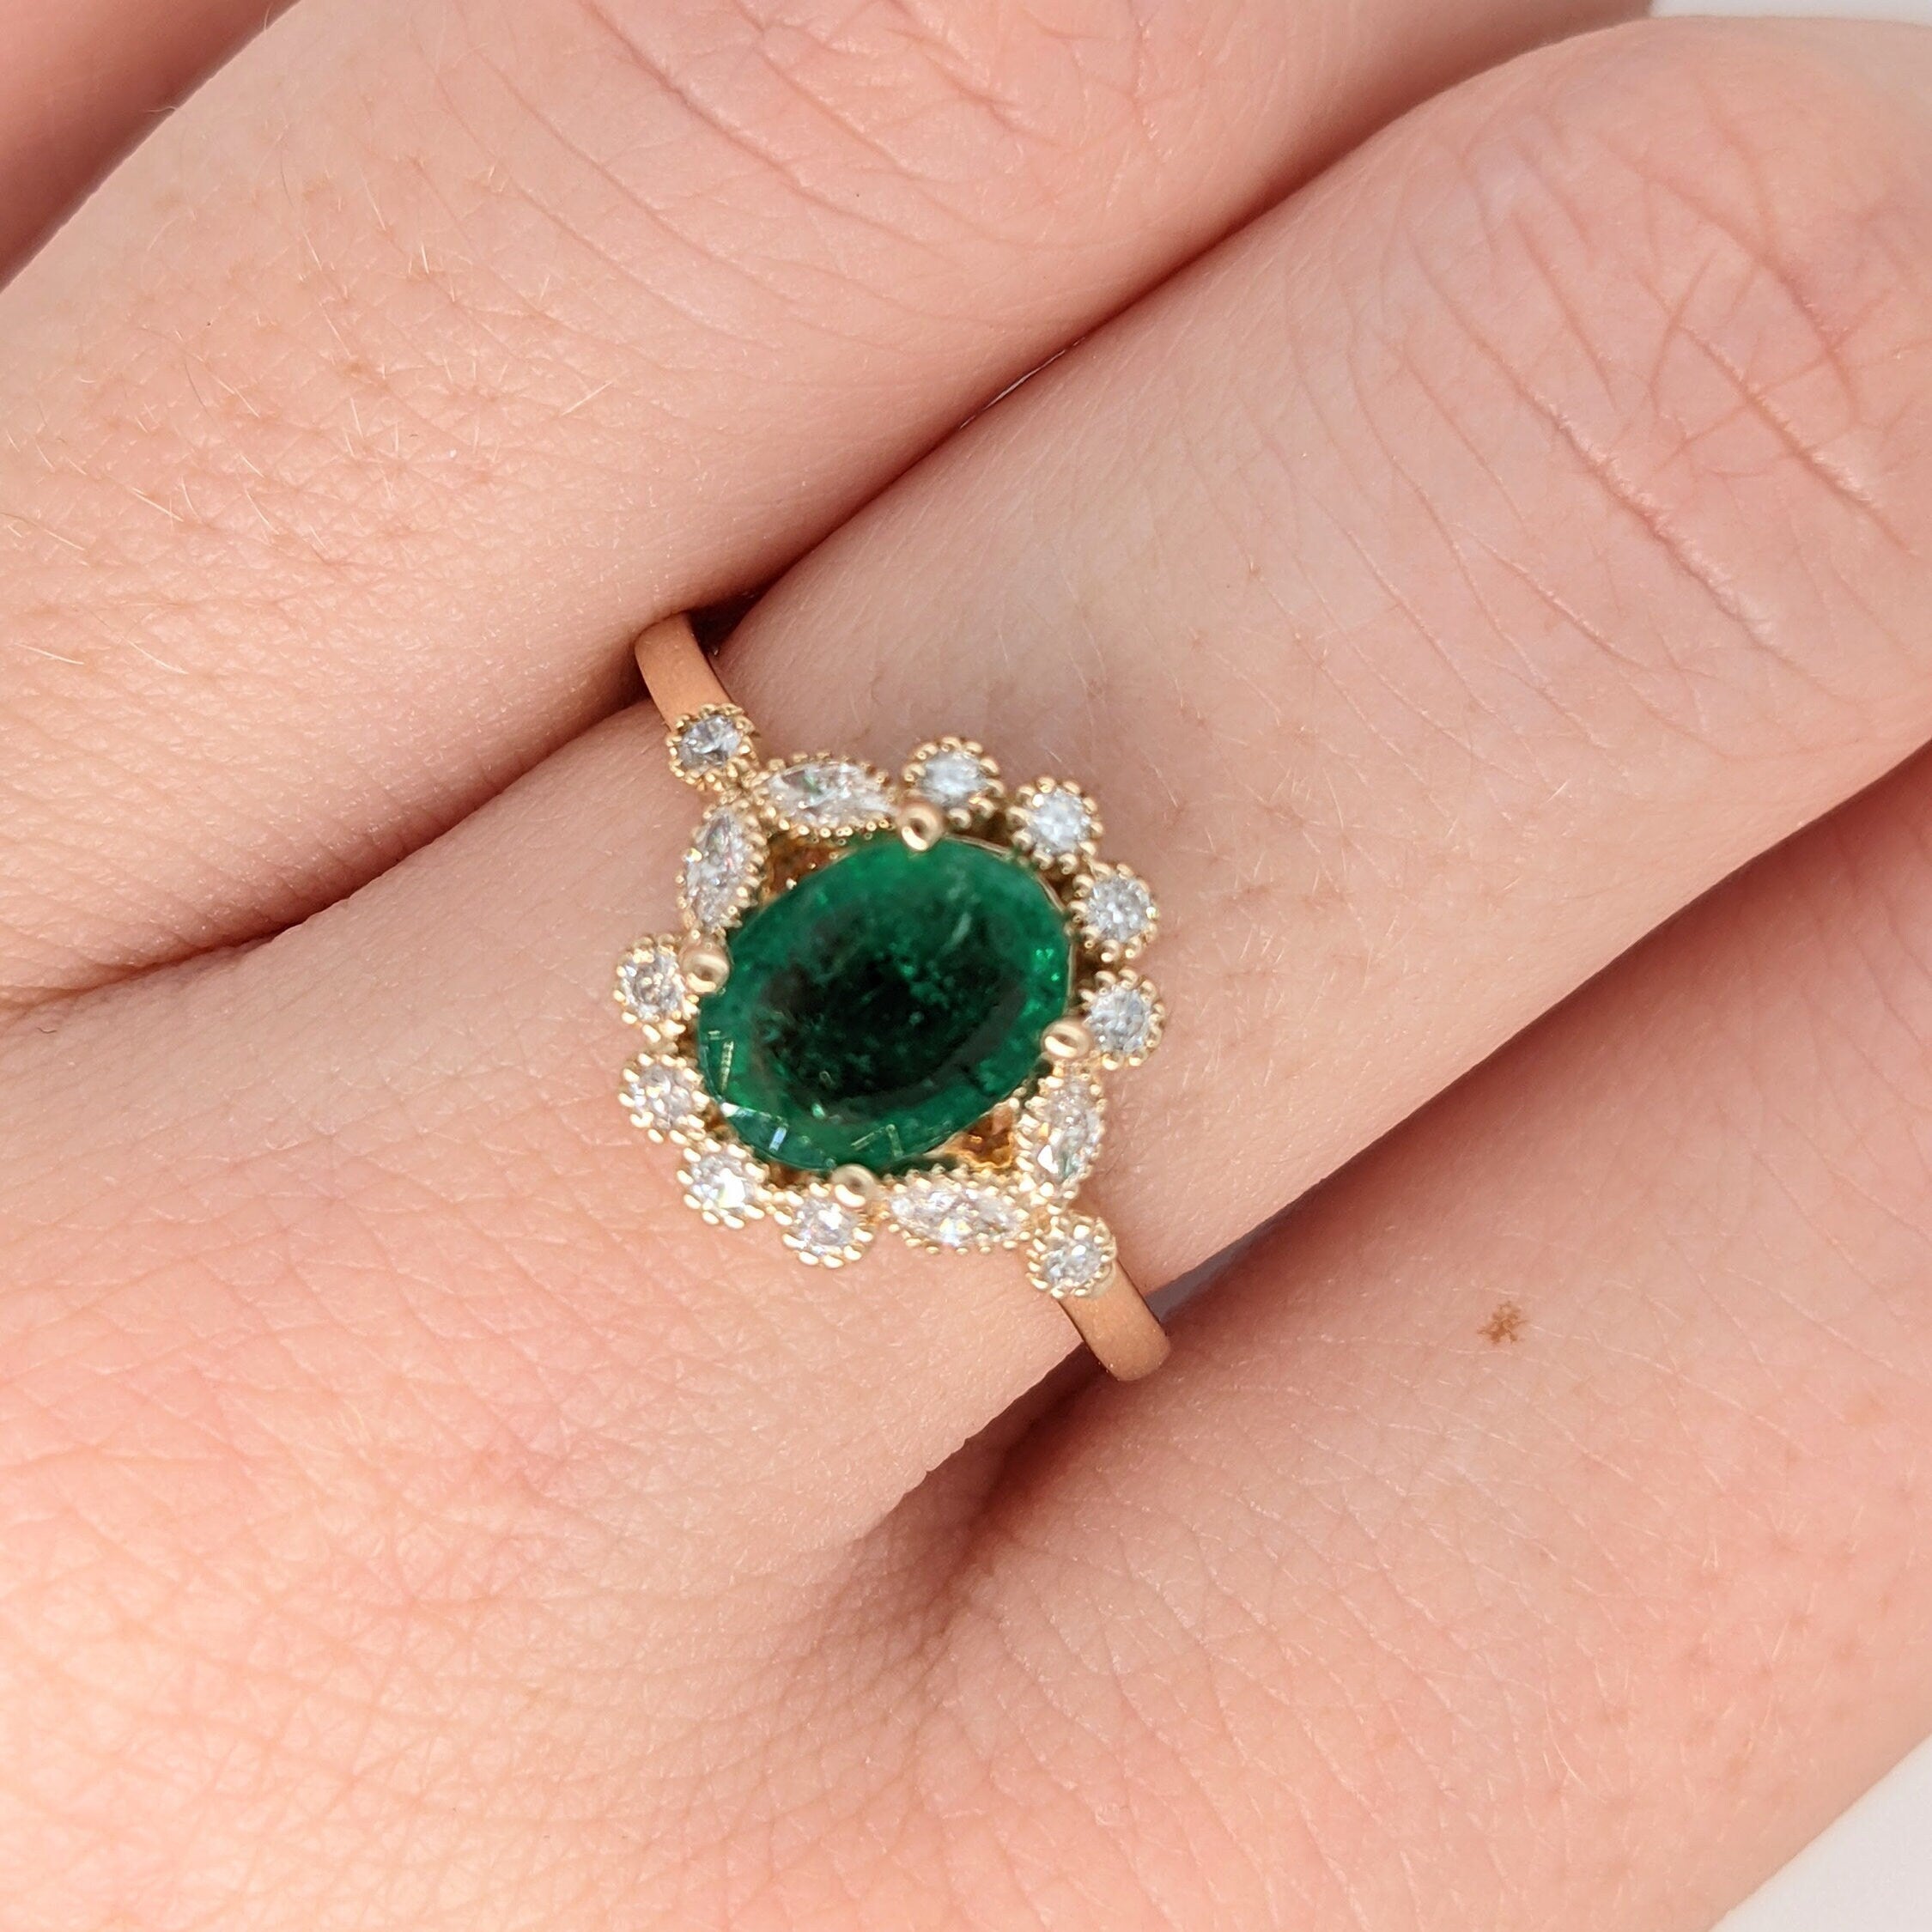 Vintage Inspired Green Emerald Ring In 14k Yellow Gold w/ Diamond Halo | Oval 8x6mm | May Birthstone | Milgrain Detail | Verdant Green Gem